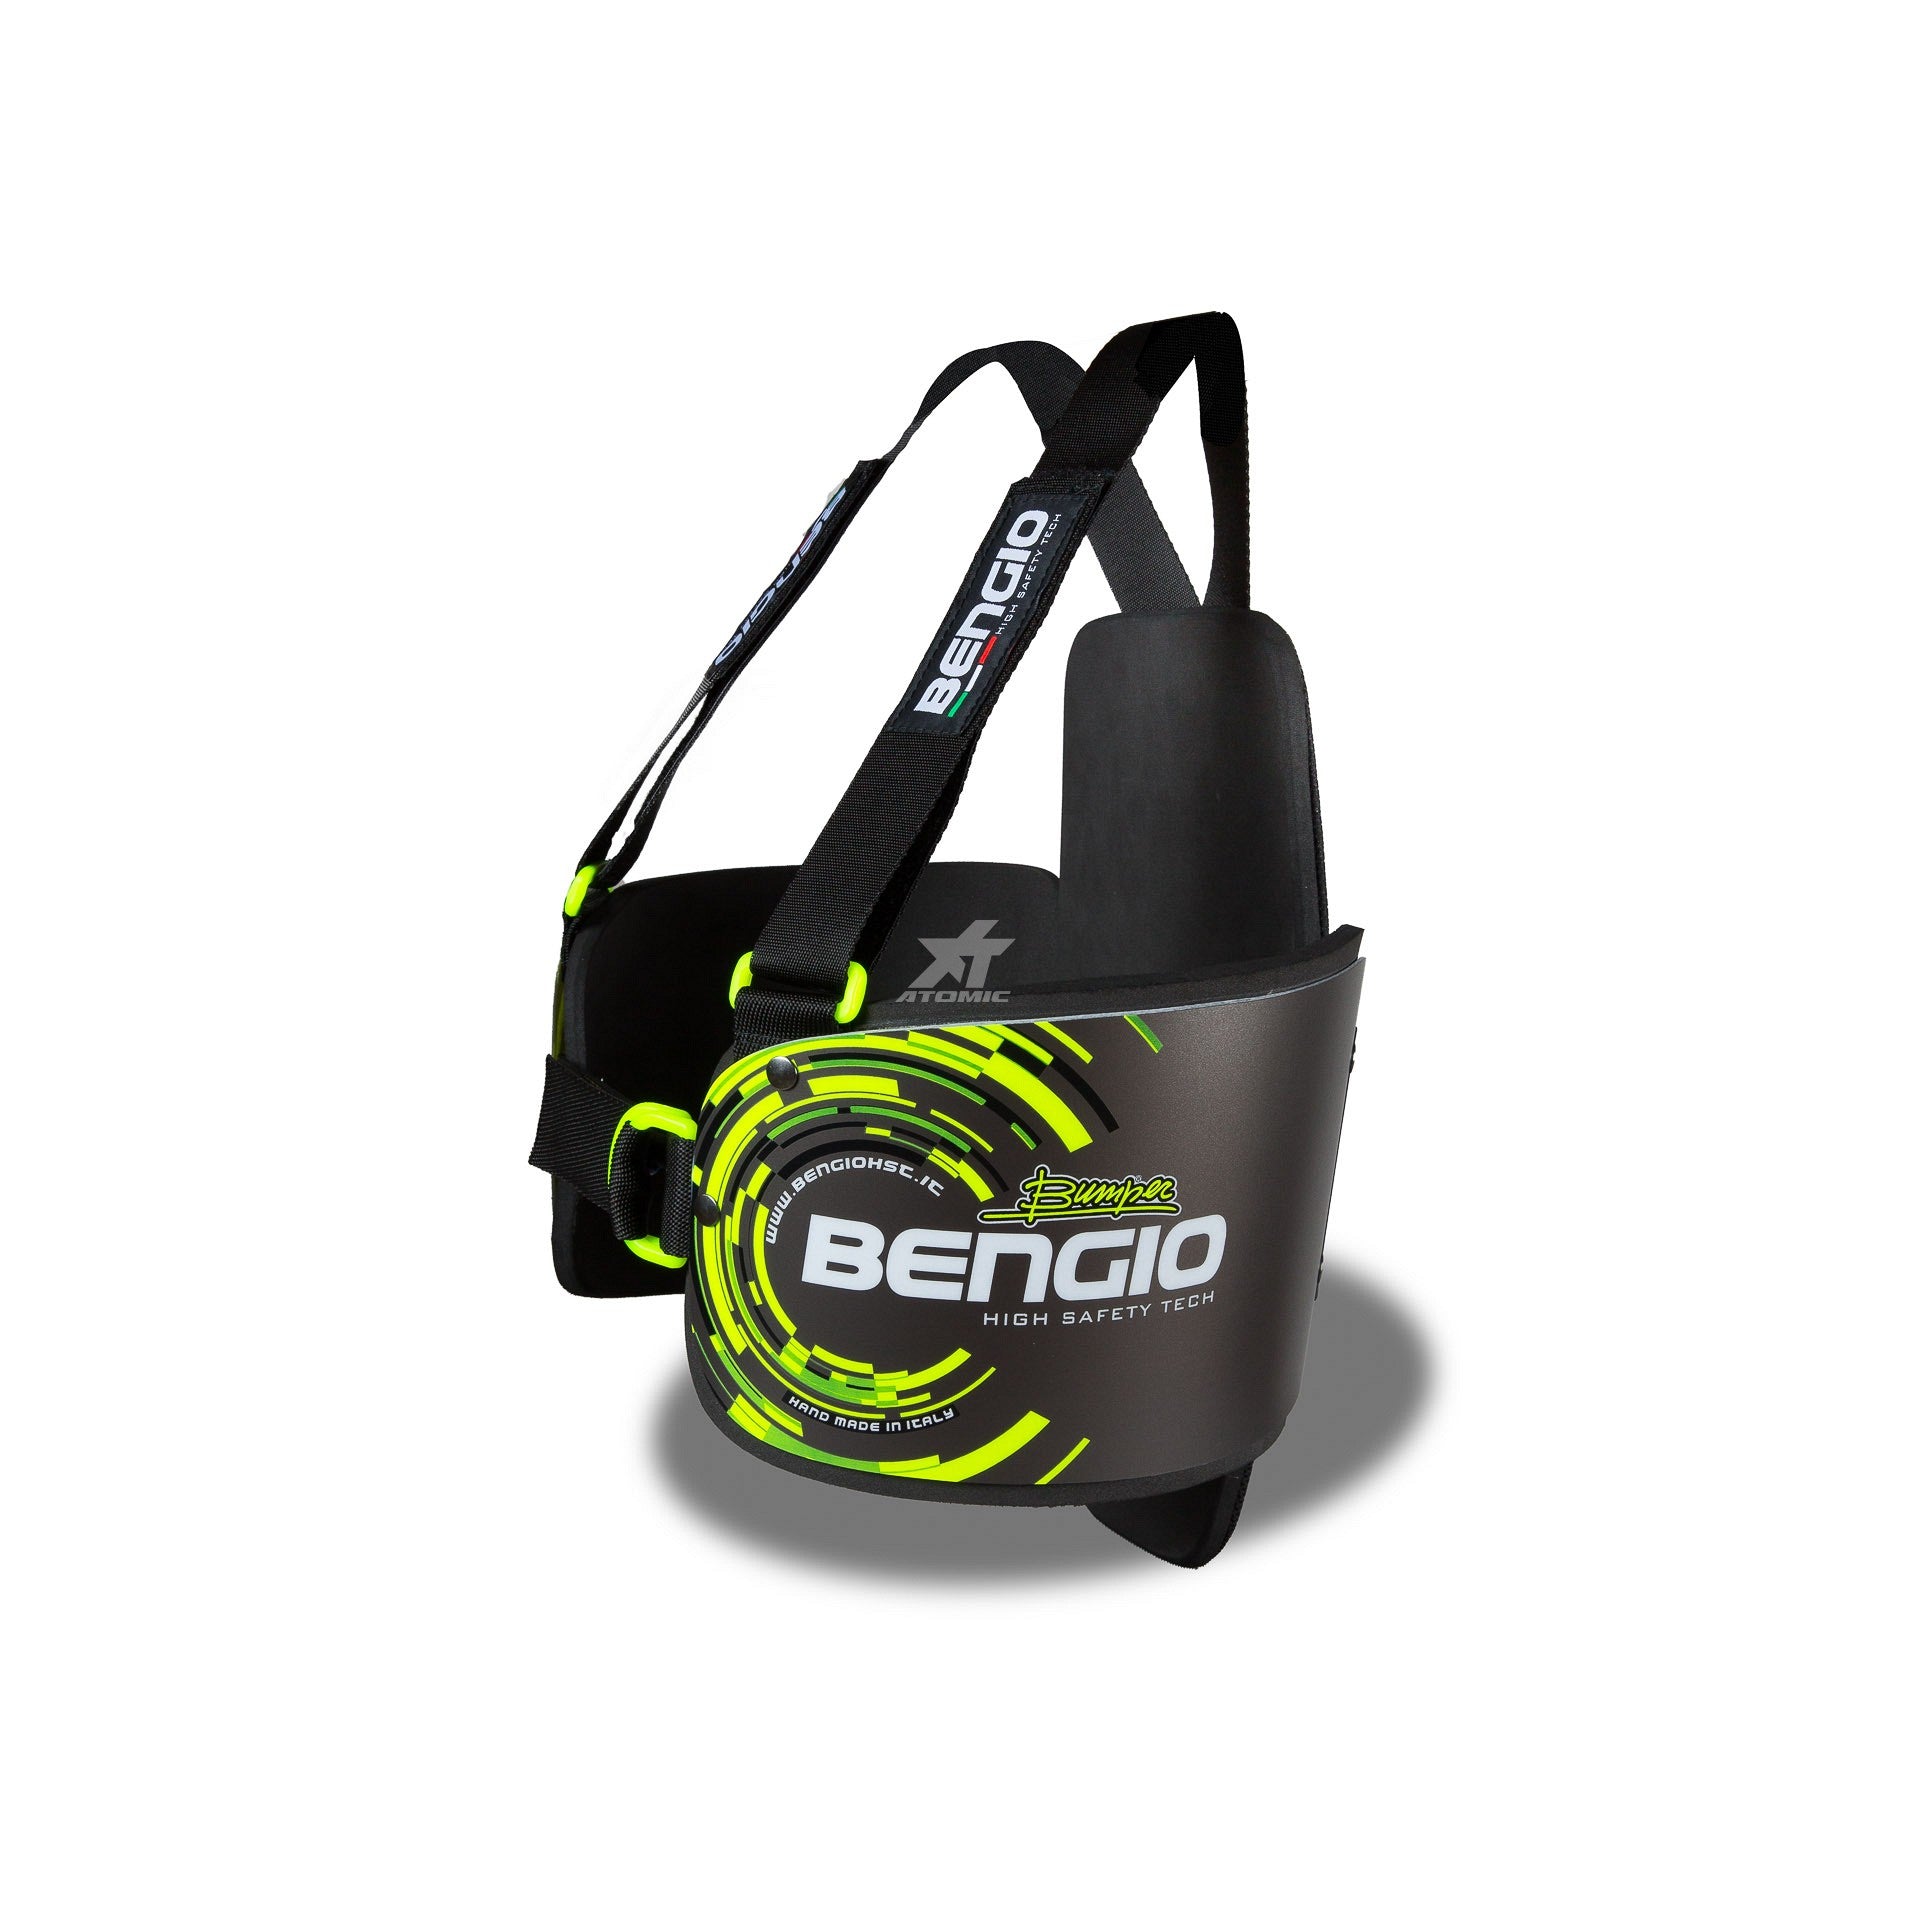 BENGIO STDPLXXLGY BUMPER Plus Захист ребер для картингу, сірий/флюор. жовтий, розмір XXL Photo-1 